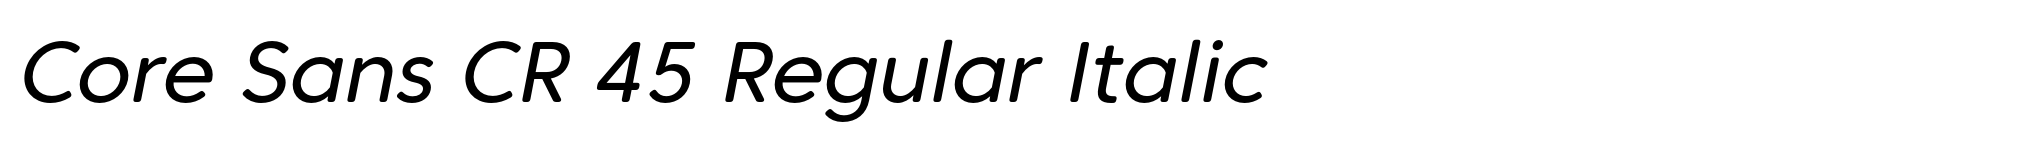 Core Sans CR 45 Regular Italic image